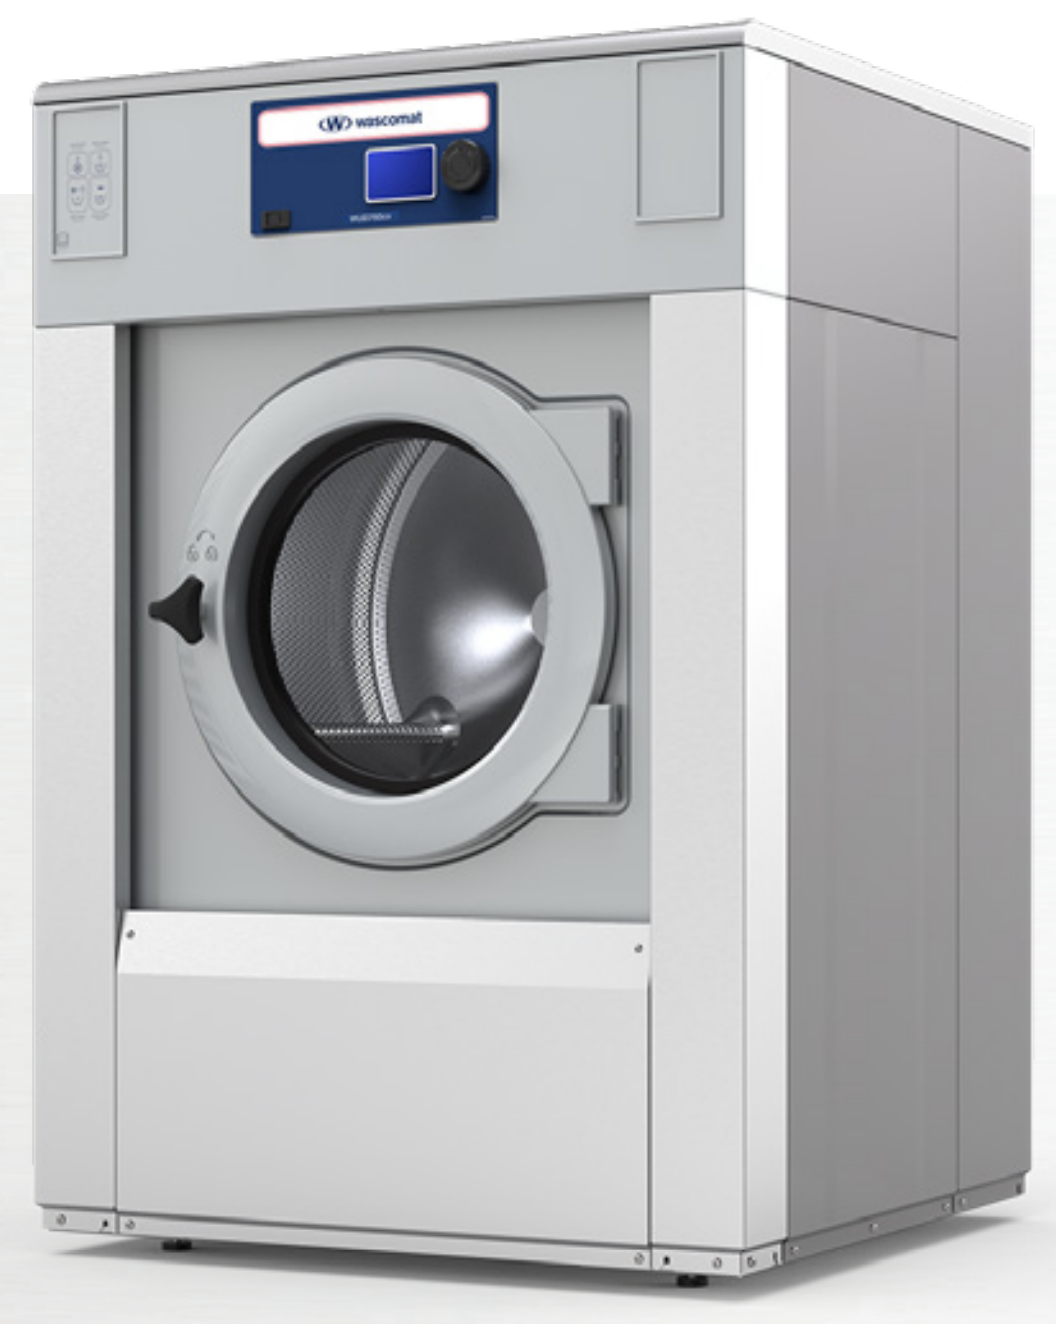 New 2022 Wascomat Wud775 Opl - Cardinal Laundry Equipment Co